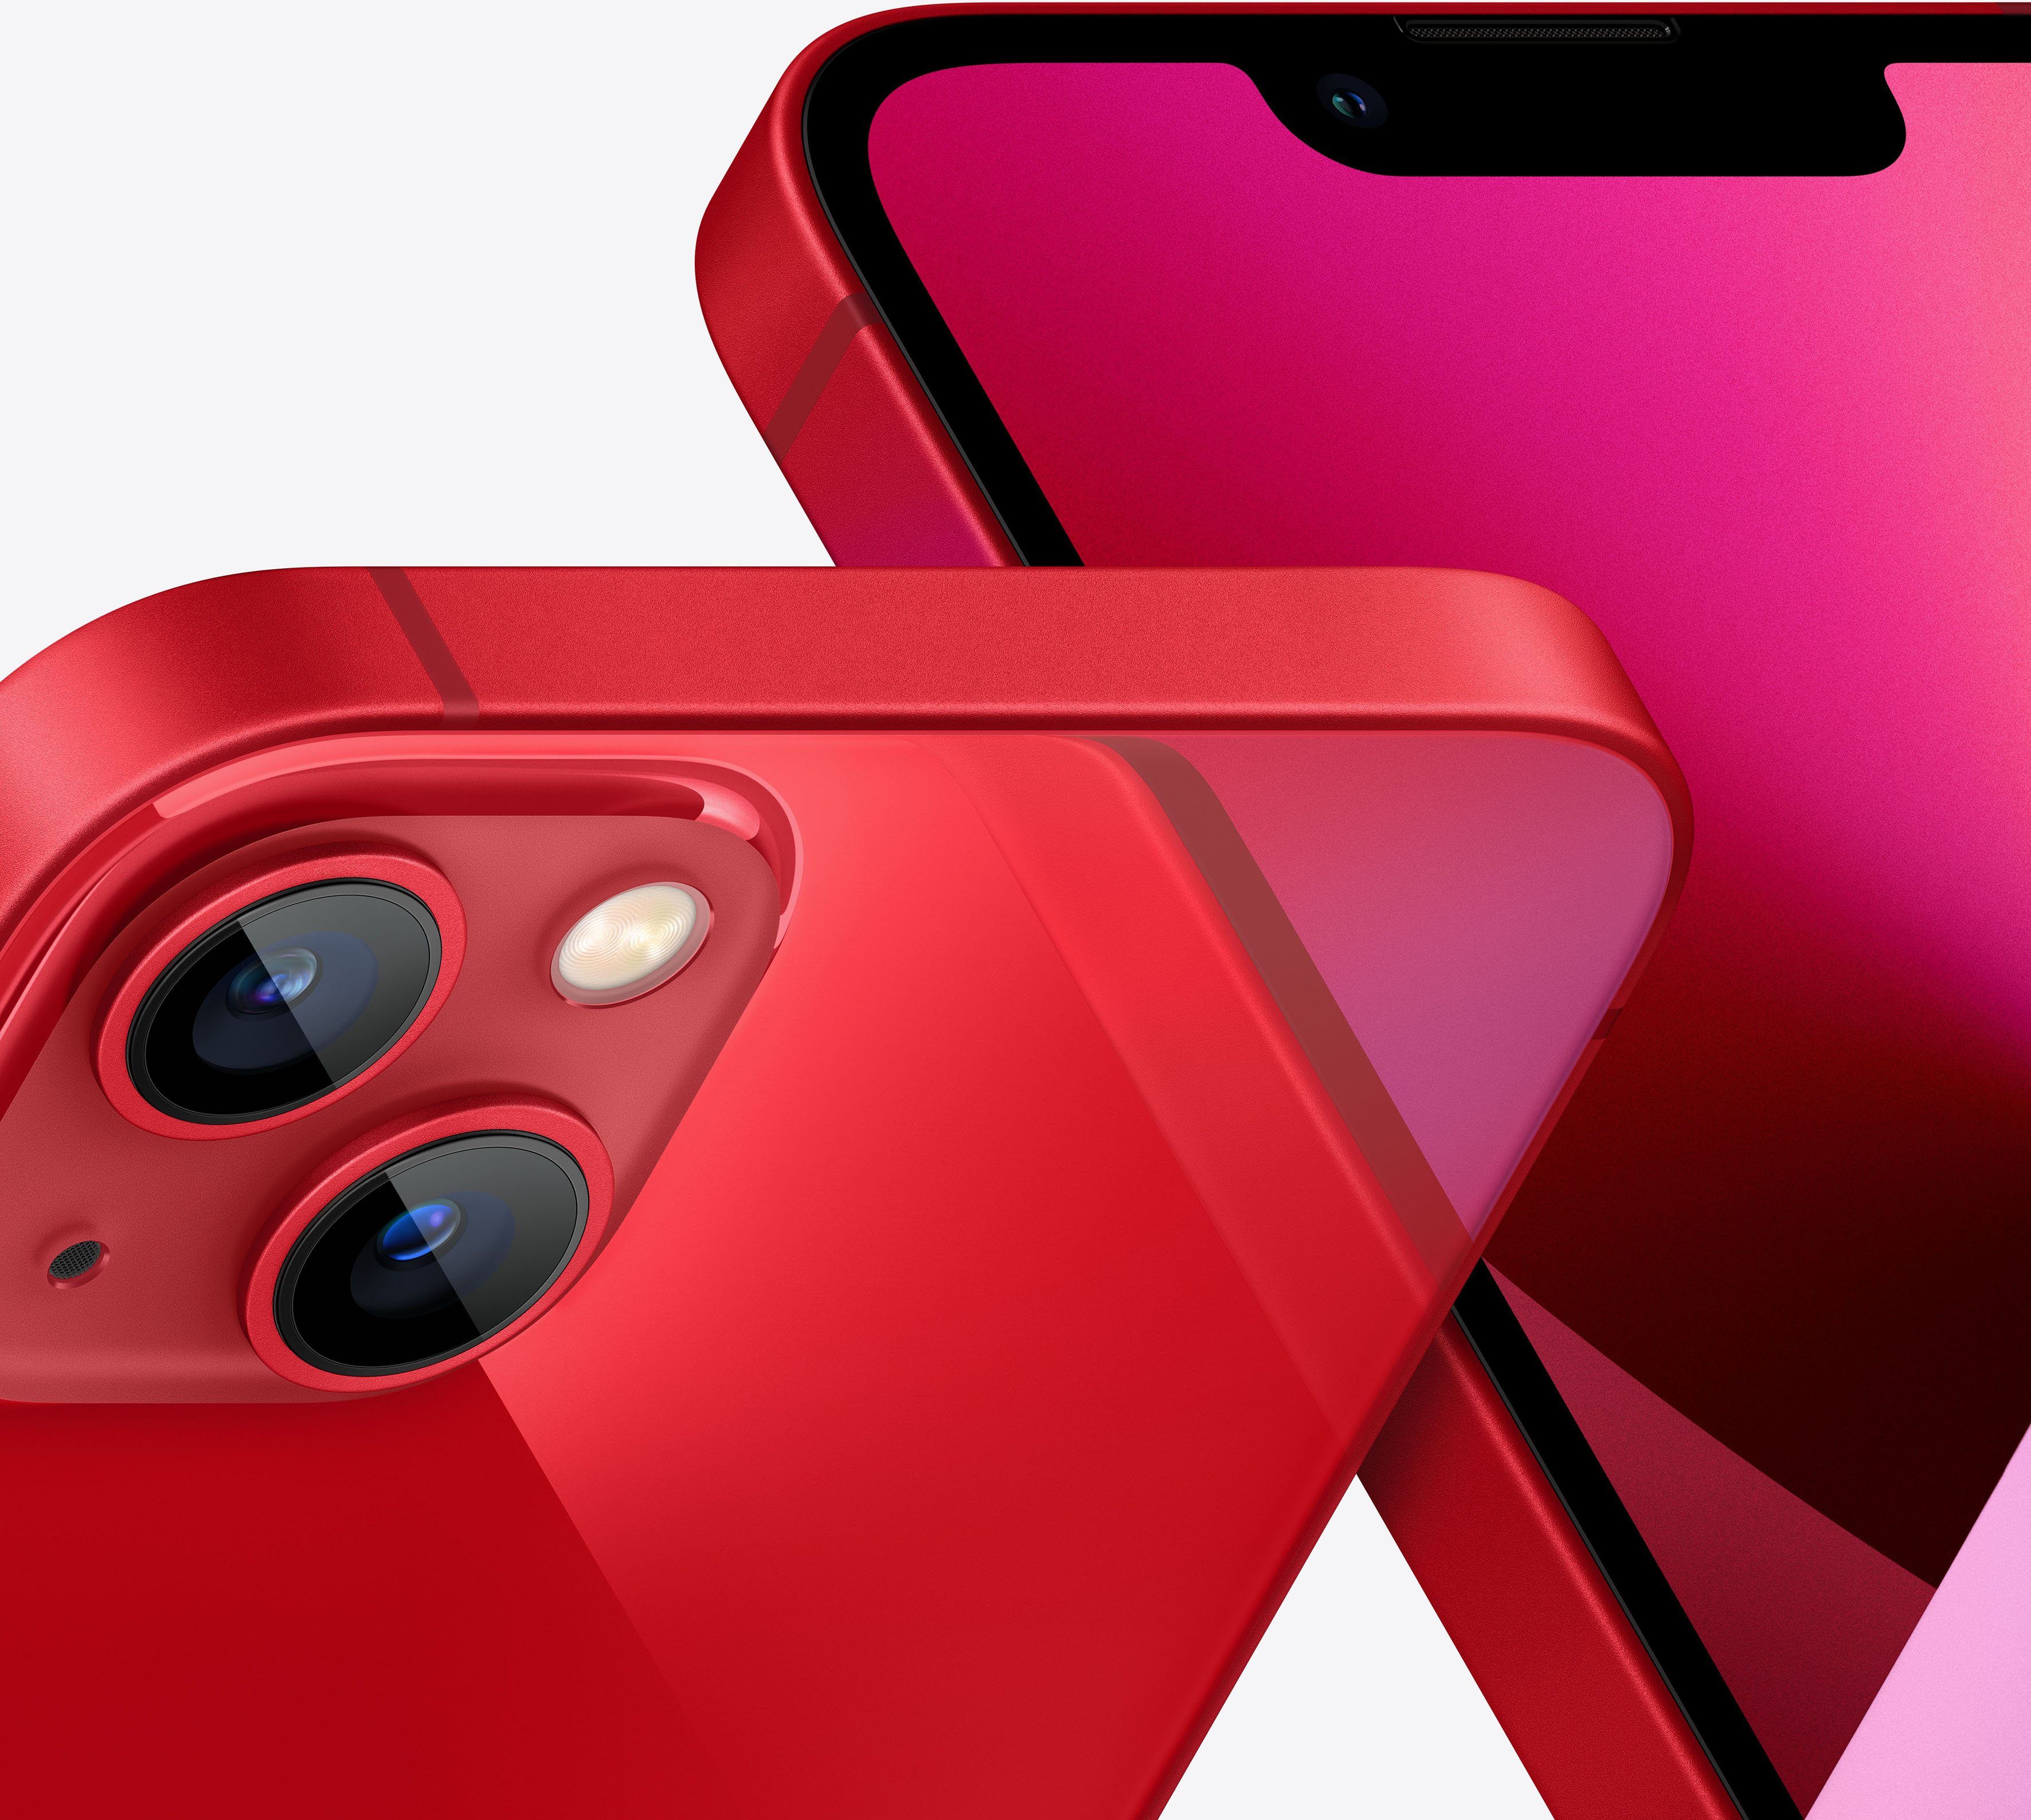 Apple iPhone 13 Smartphone MP cm/6,1 12 Kamera) Red Speicherplatz, GB (15,4 256 Zoll